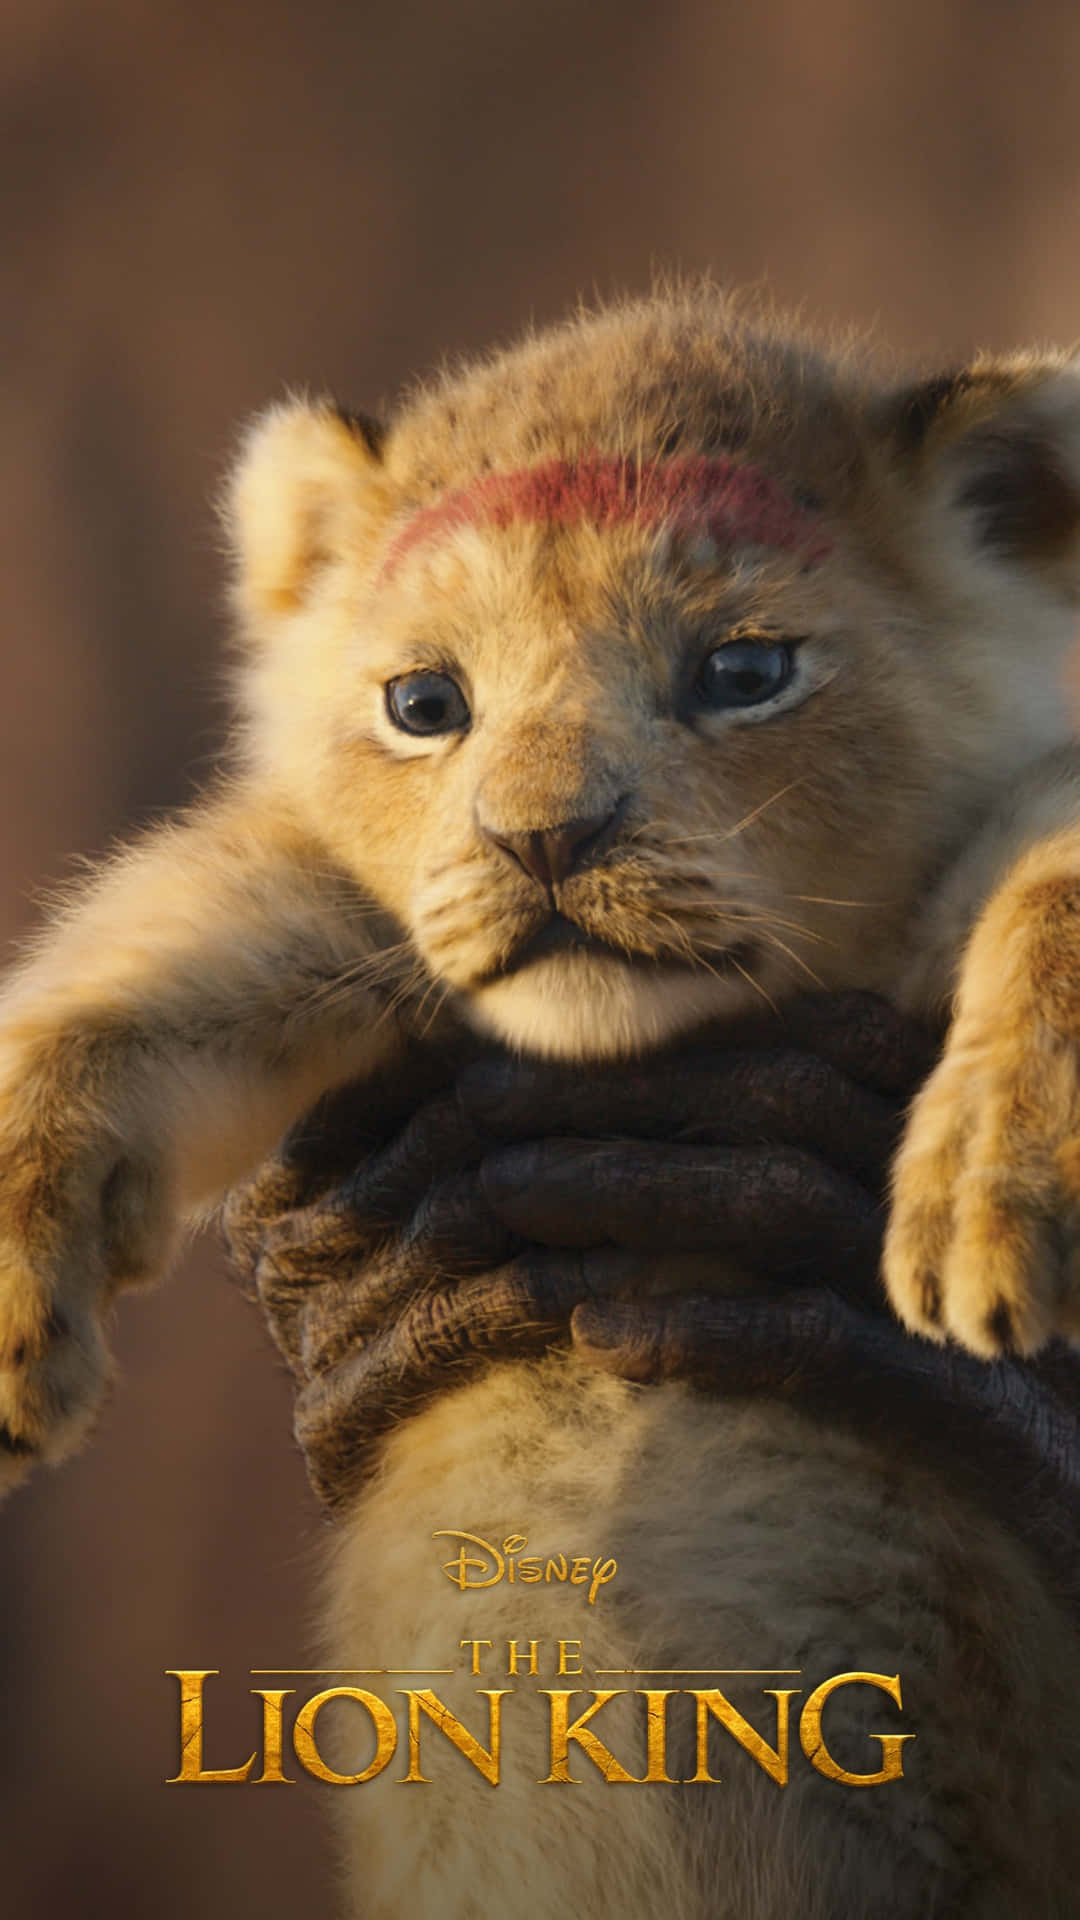 Cute Lion King 2019 Film Poster Wallpaper